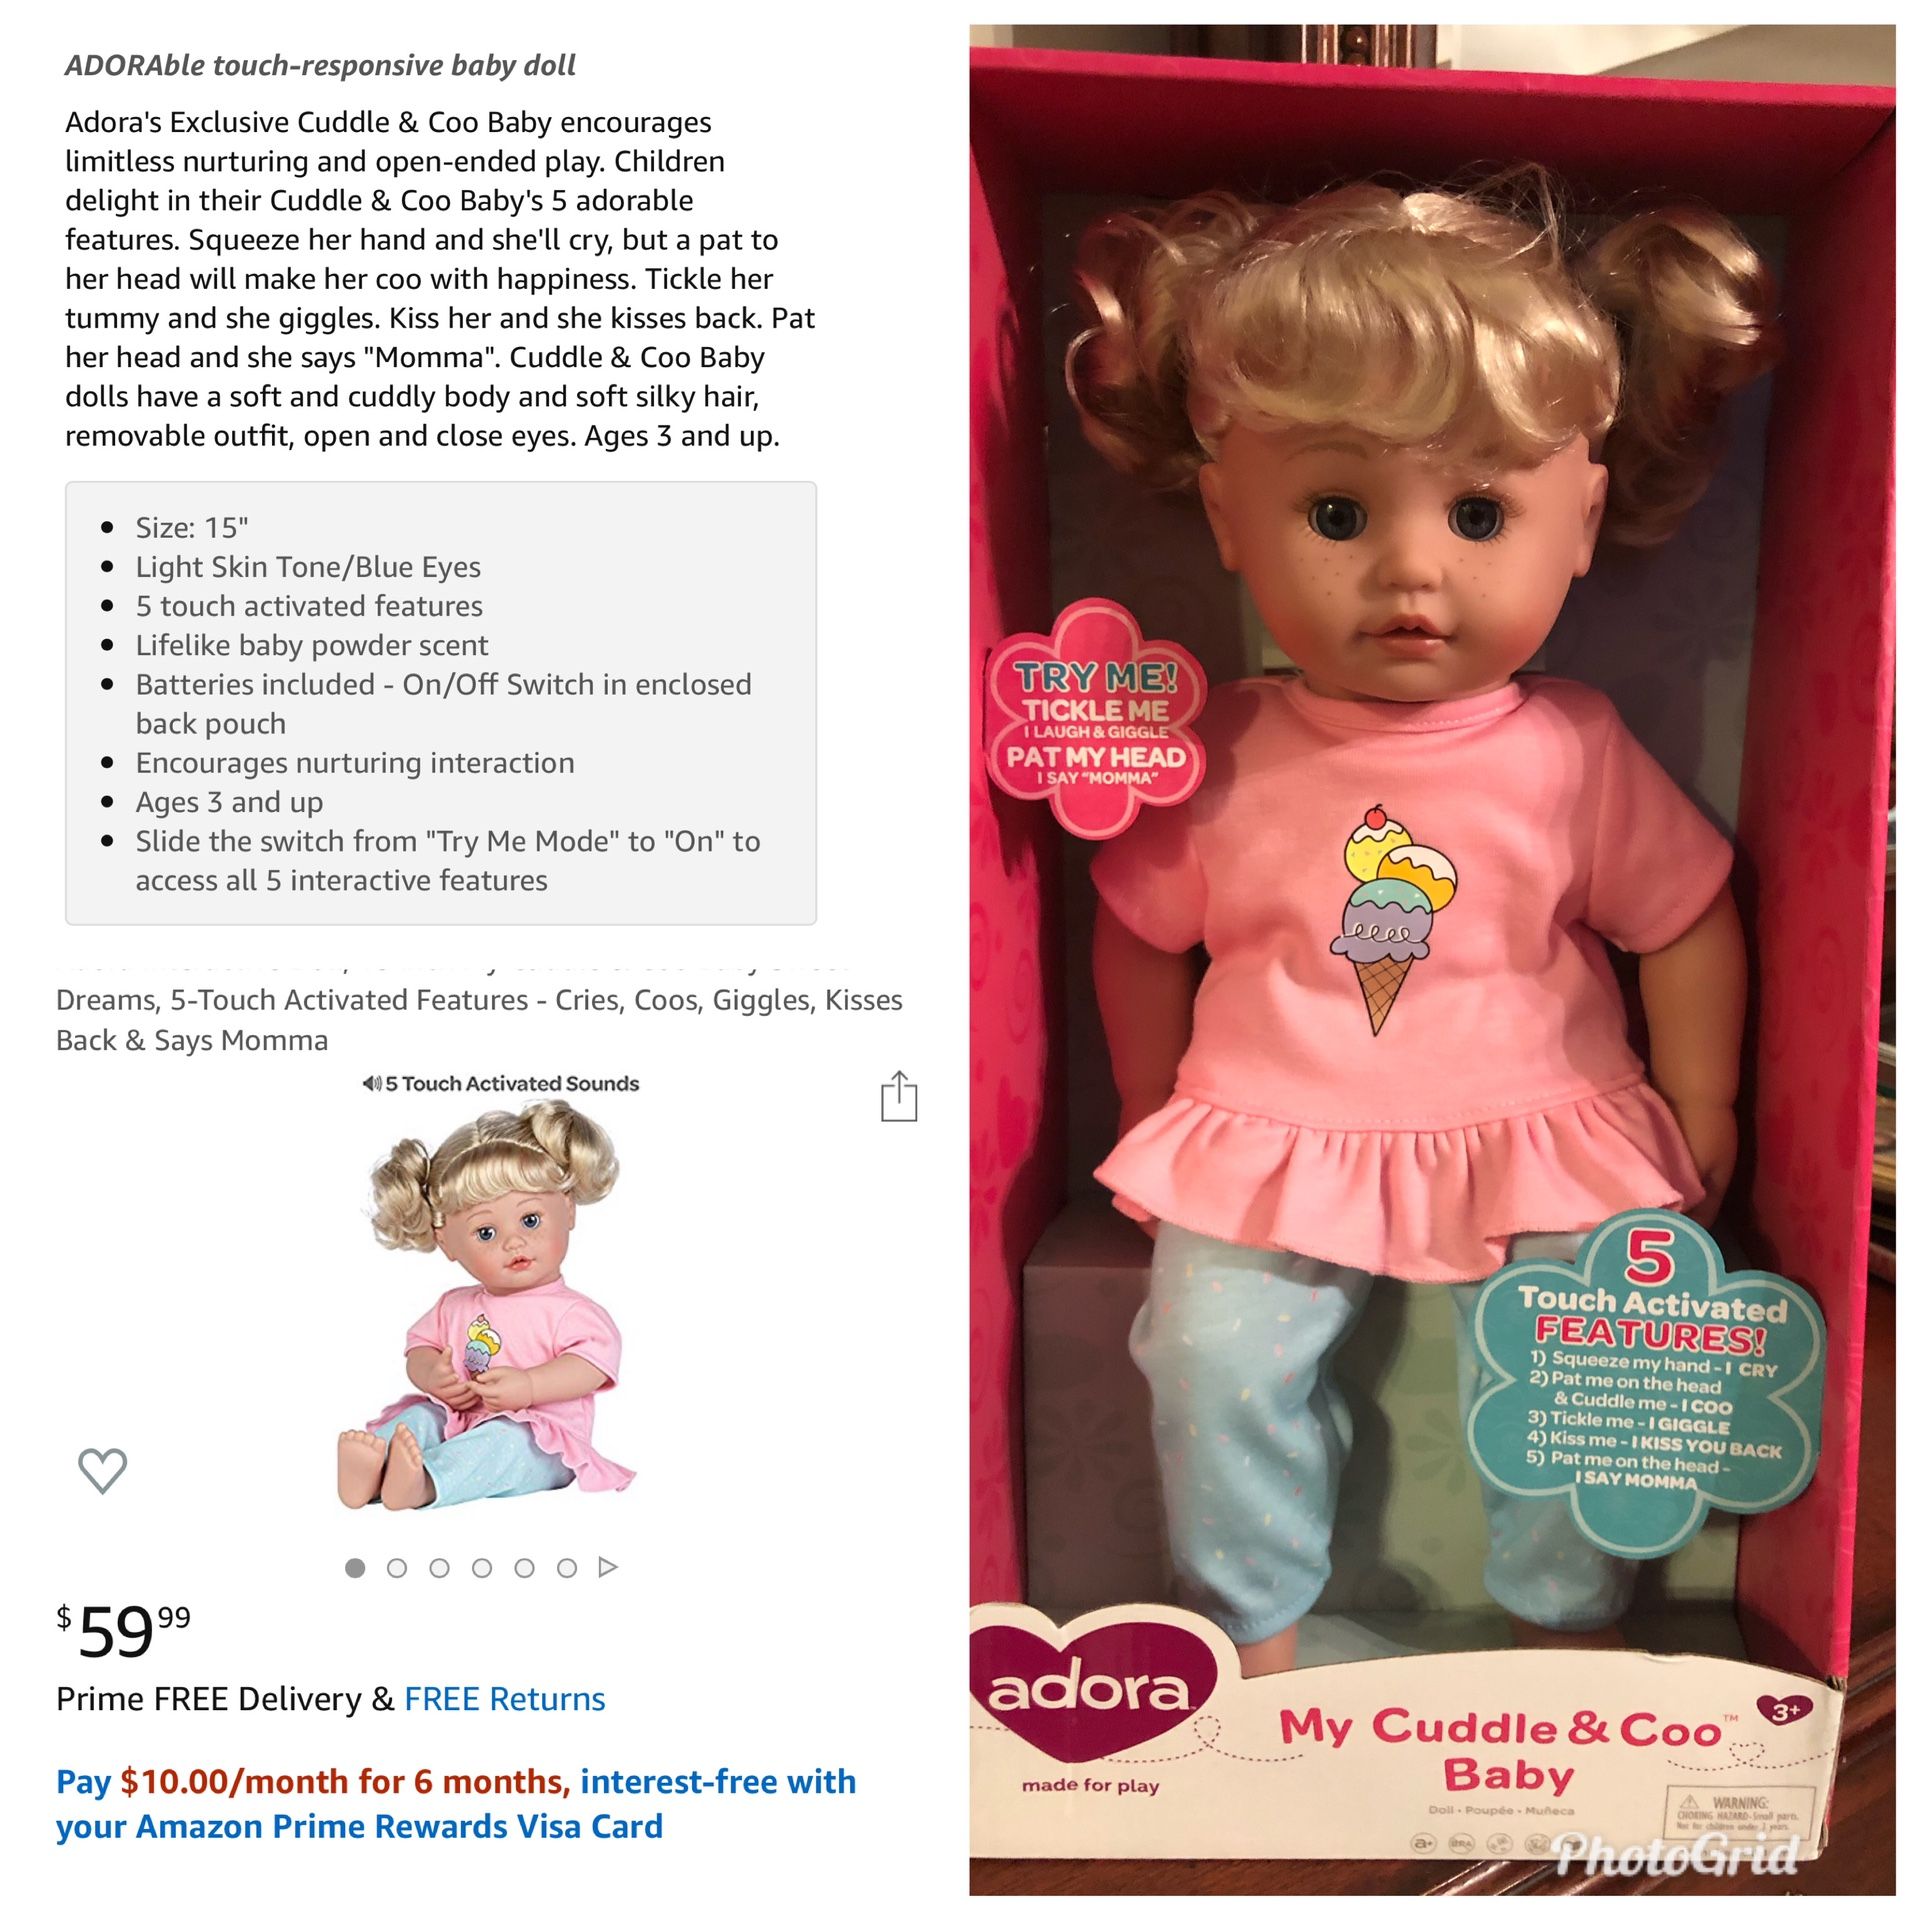 NEW Interactive Adora Doll Reg $59